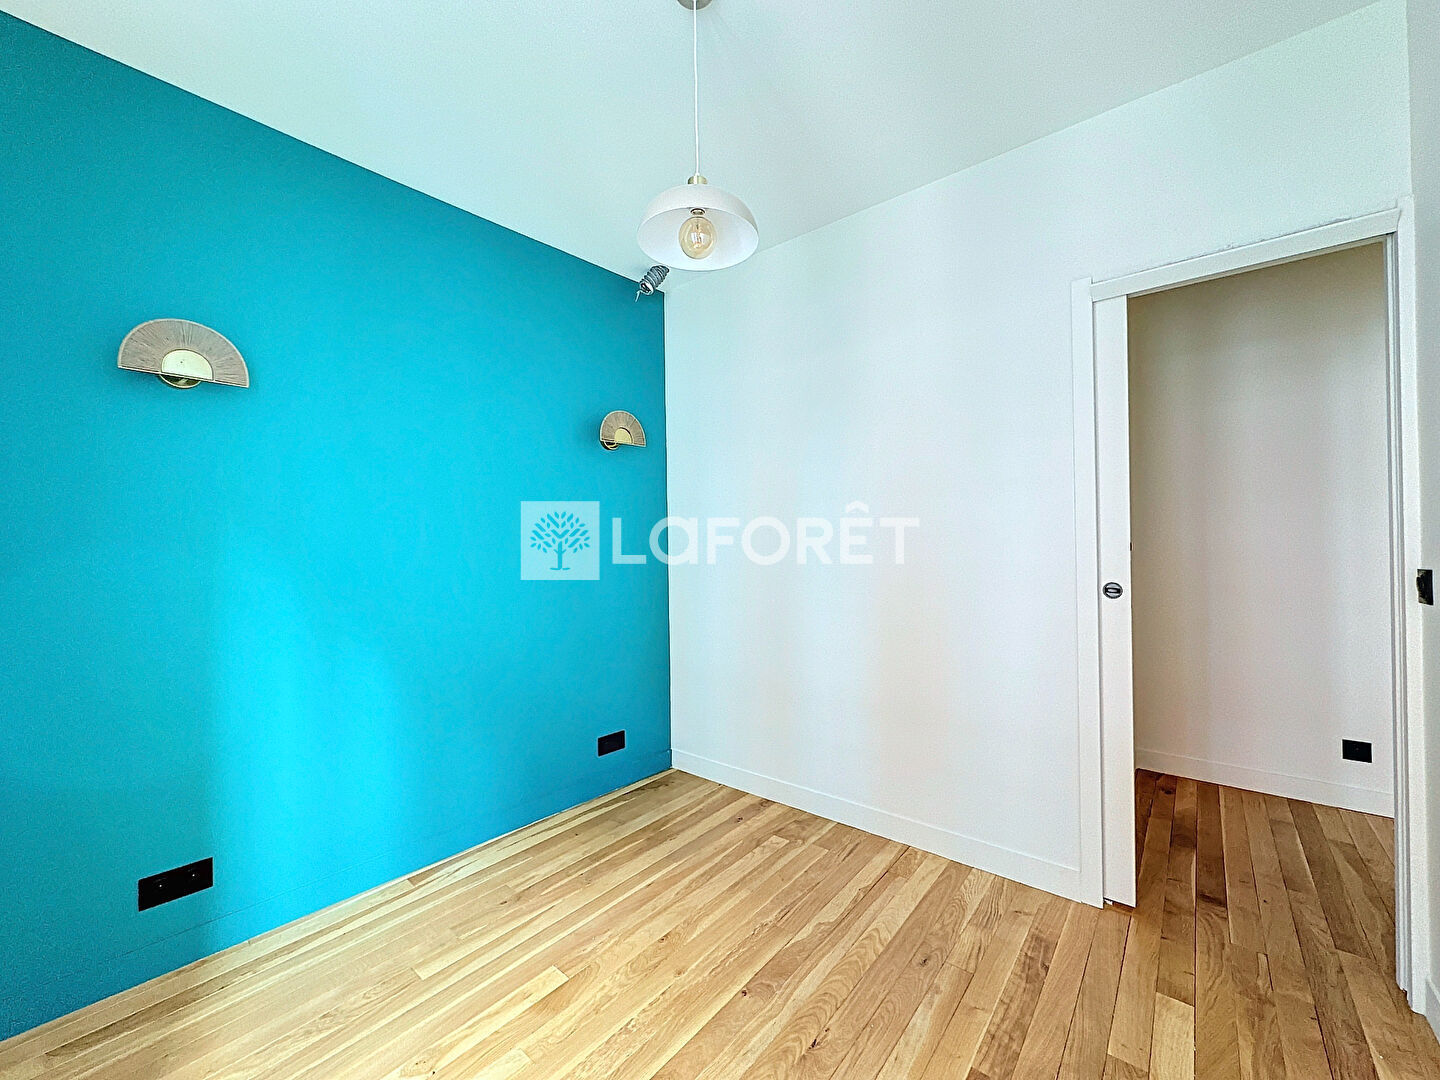 Appartement a louer malakoff - 3 pièce(s) - 37 m2 - Surfyn